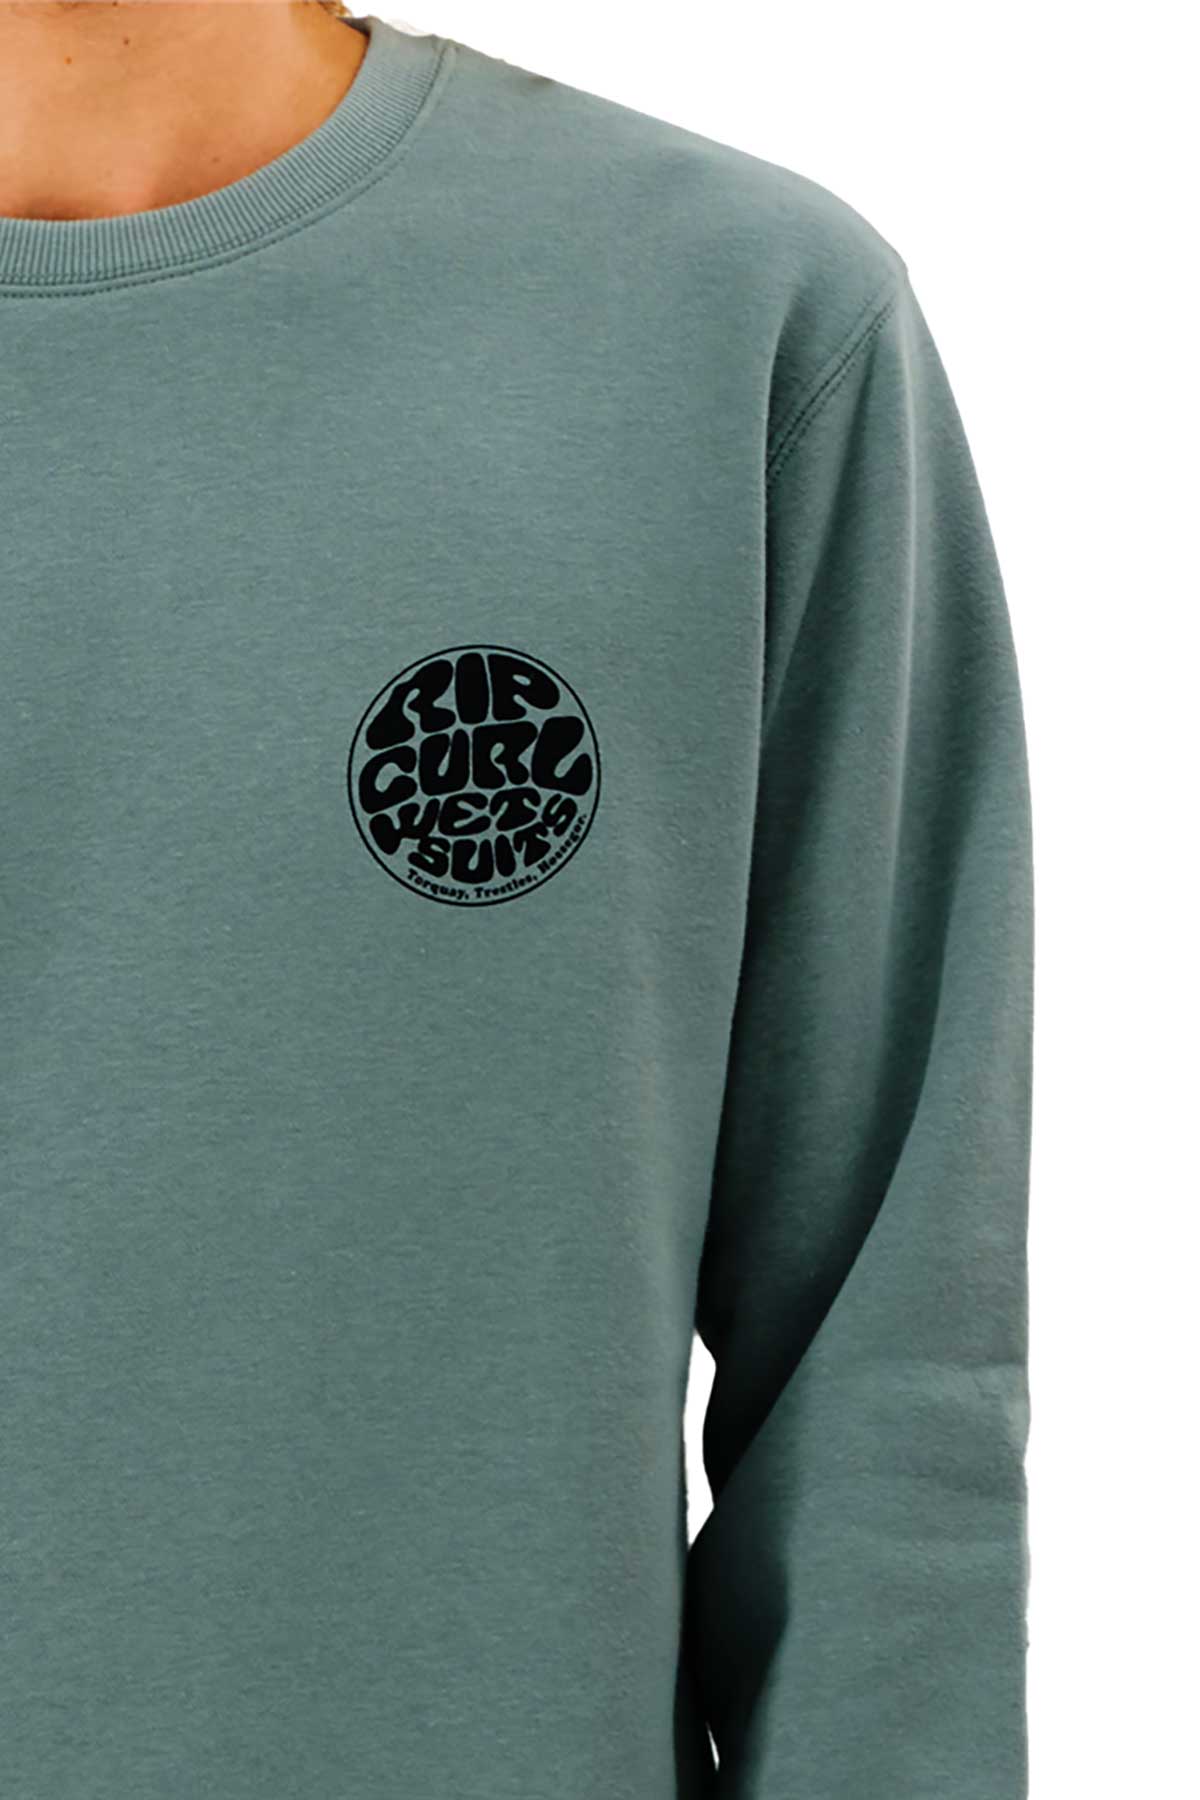 Rip Curl Mens Wetsuit Icon Sweatshirt close up of logo on bluestone top